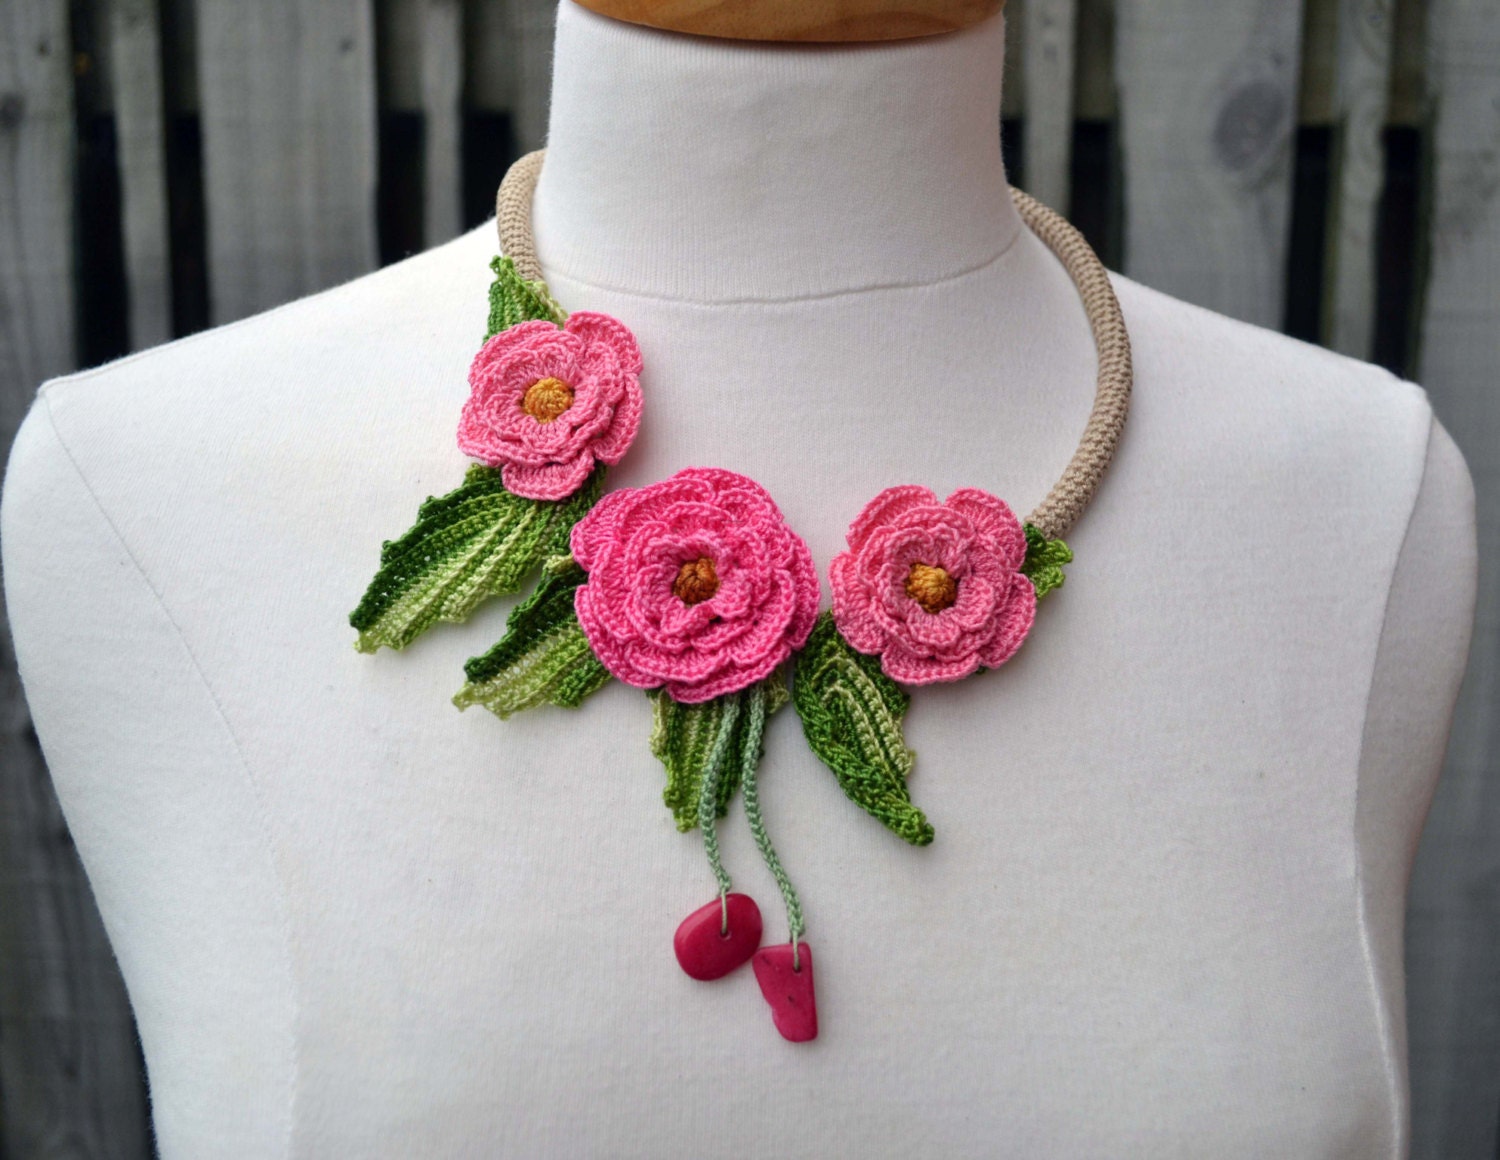 Pink crochet necklace choker flower floral 3d by FlowersbyIrene